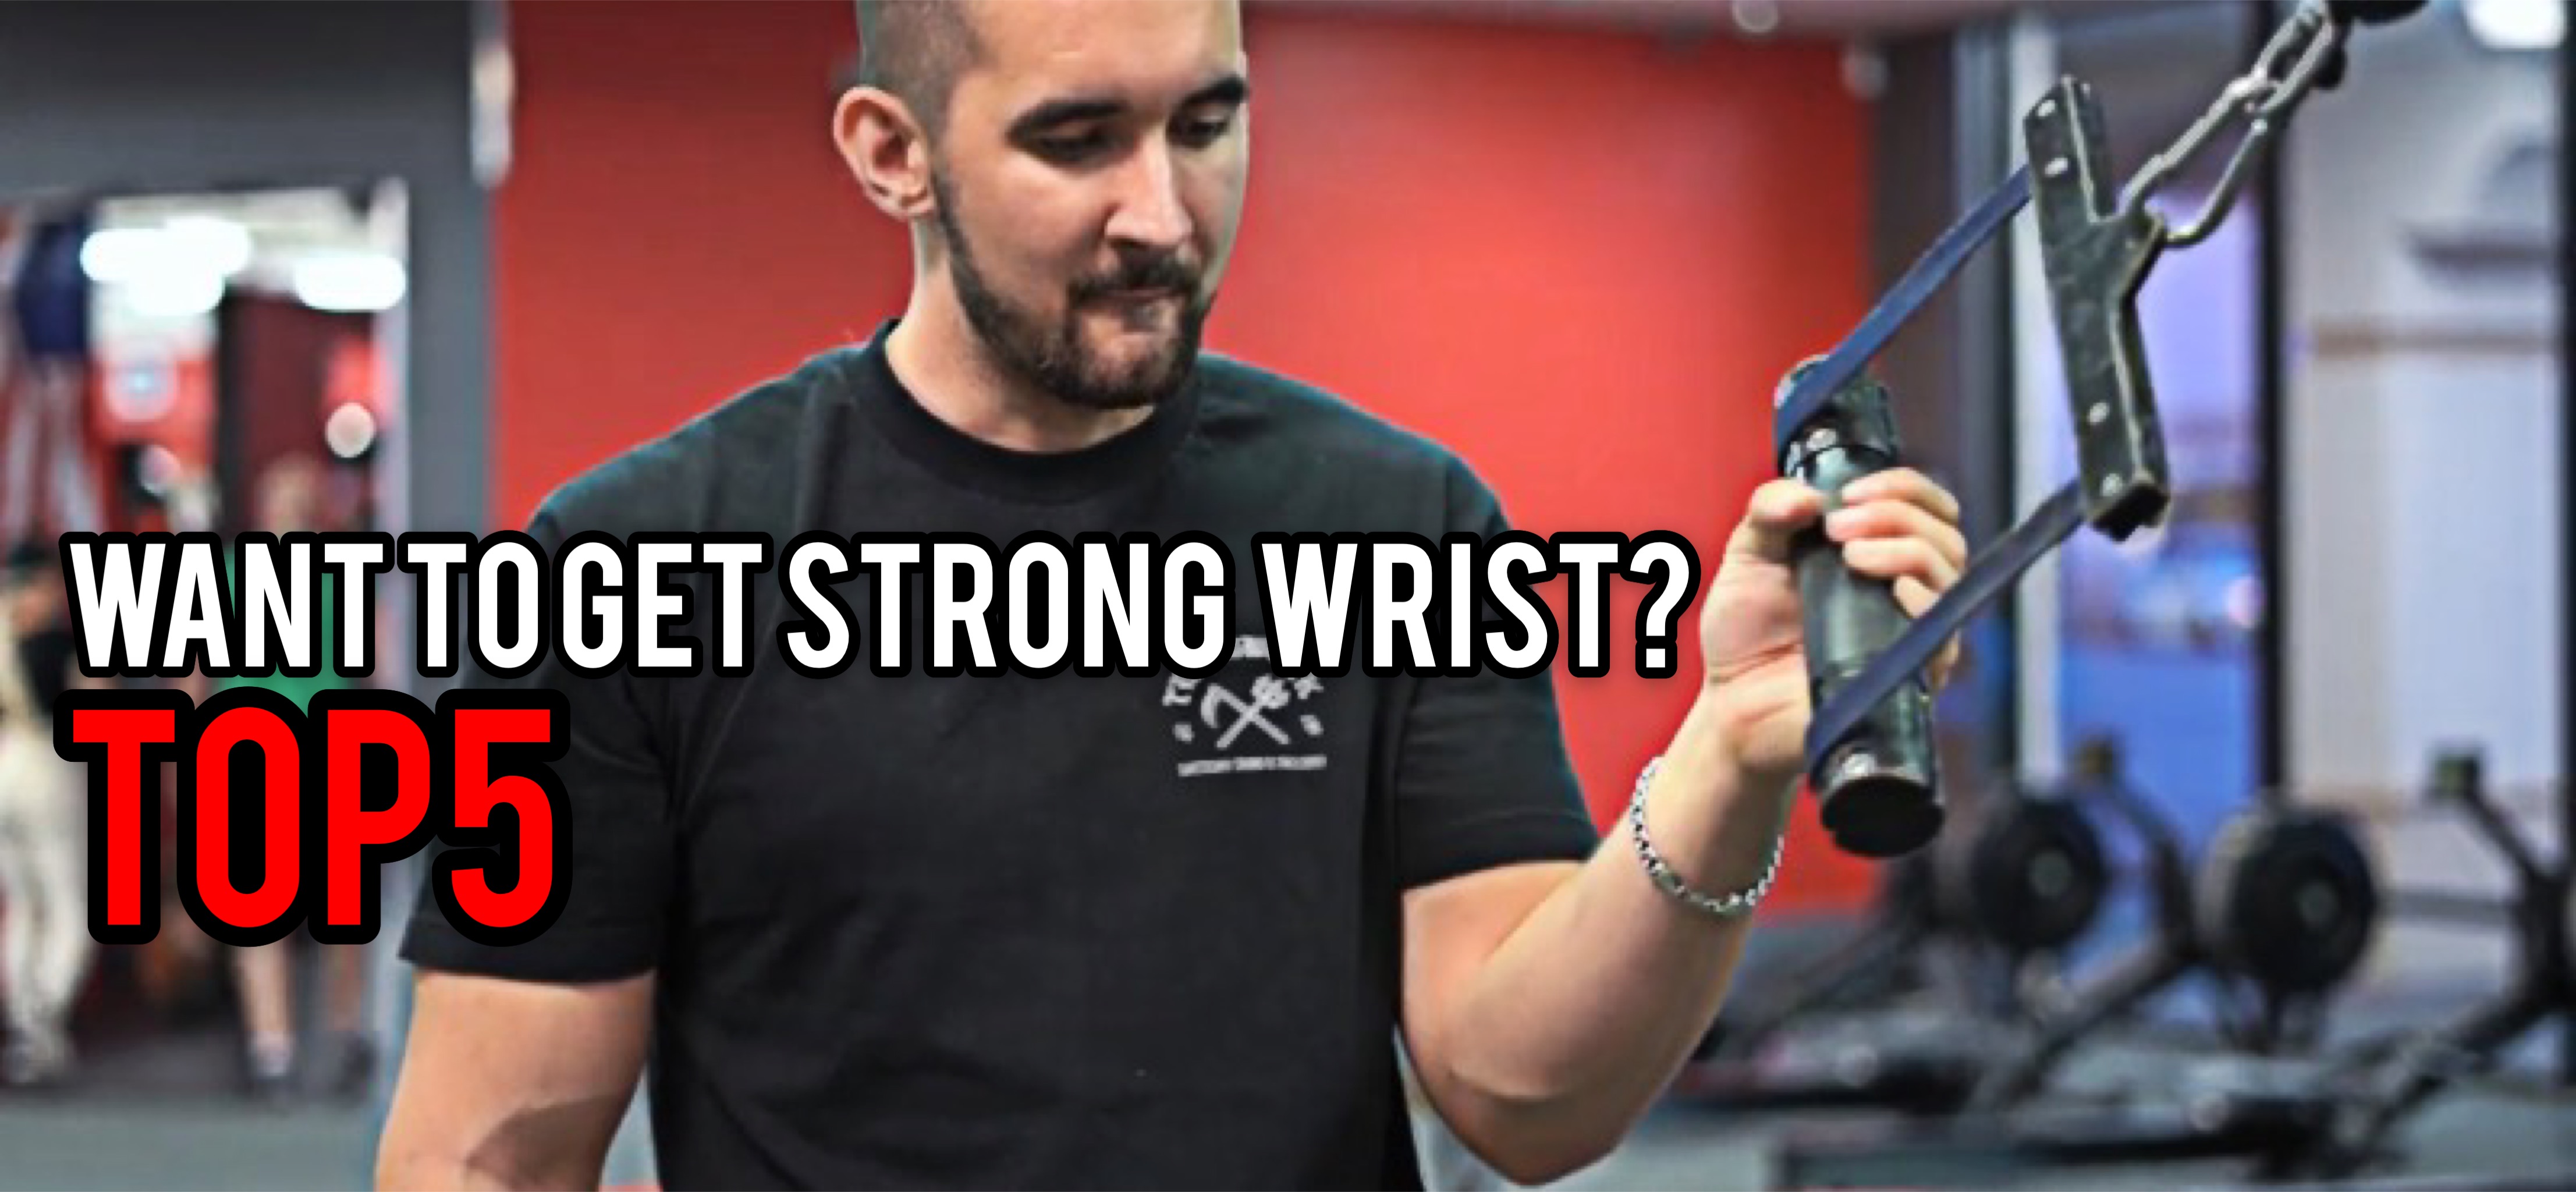 VIDEO: TOP 5 Wrist exercises by Artem Taranenko